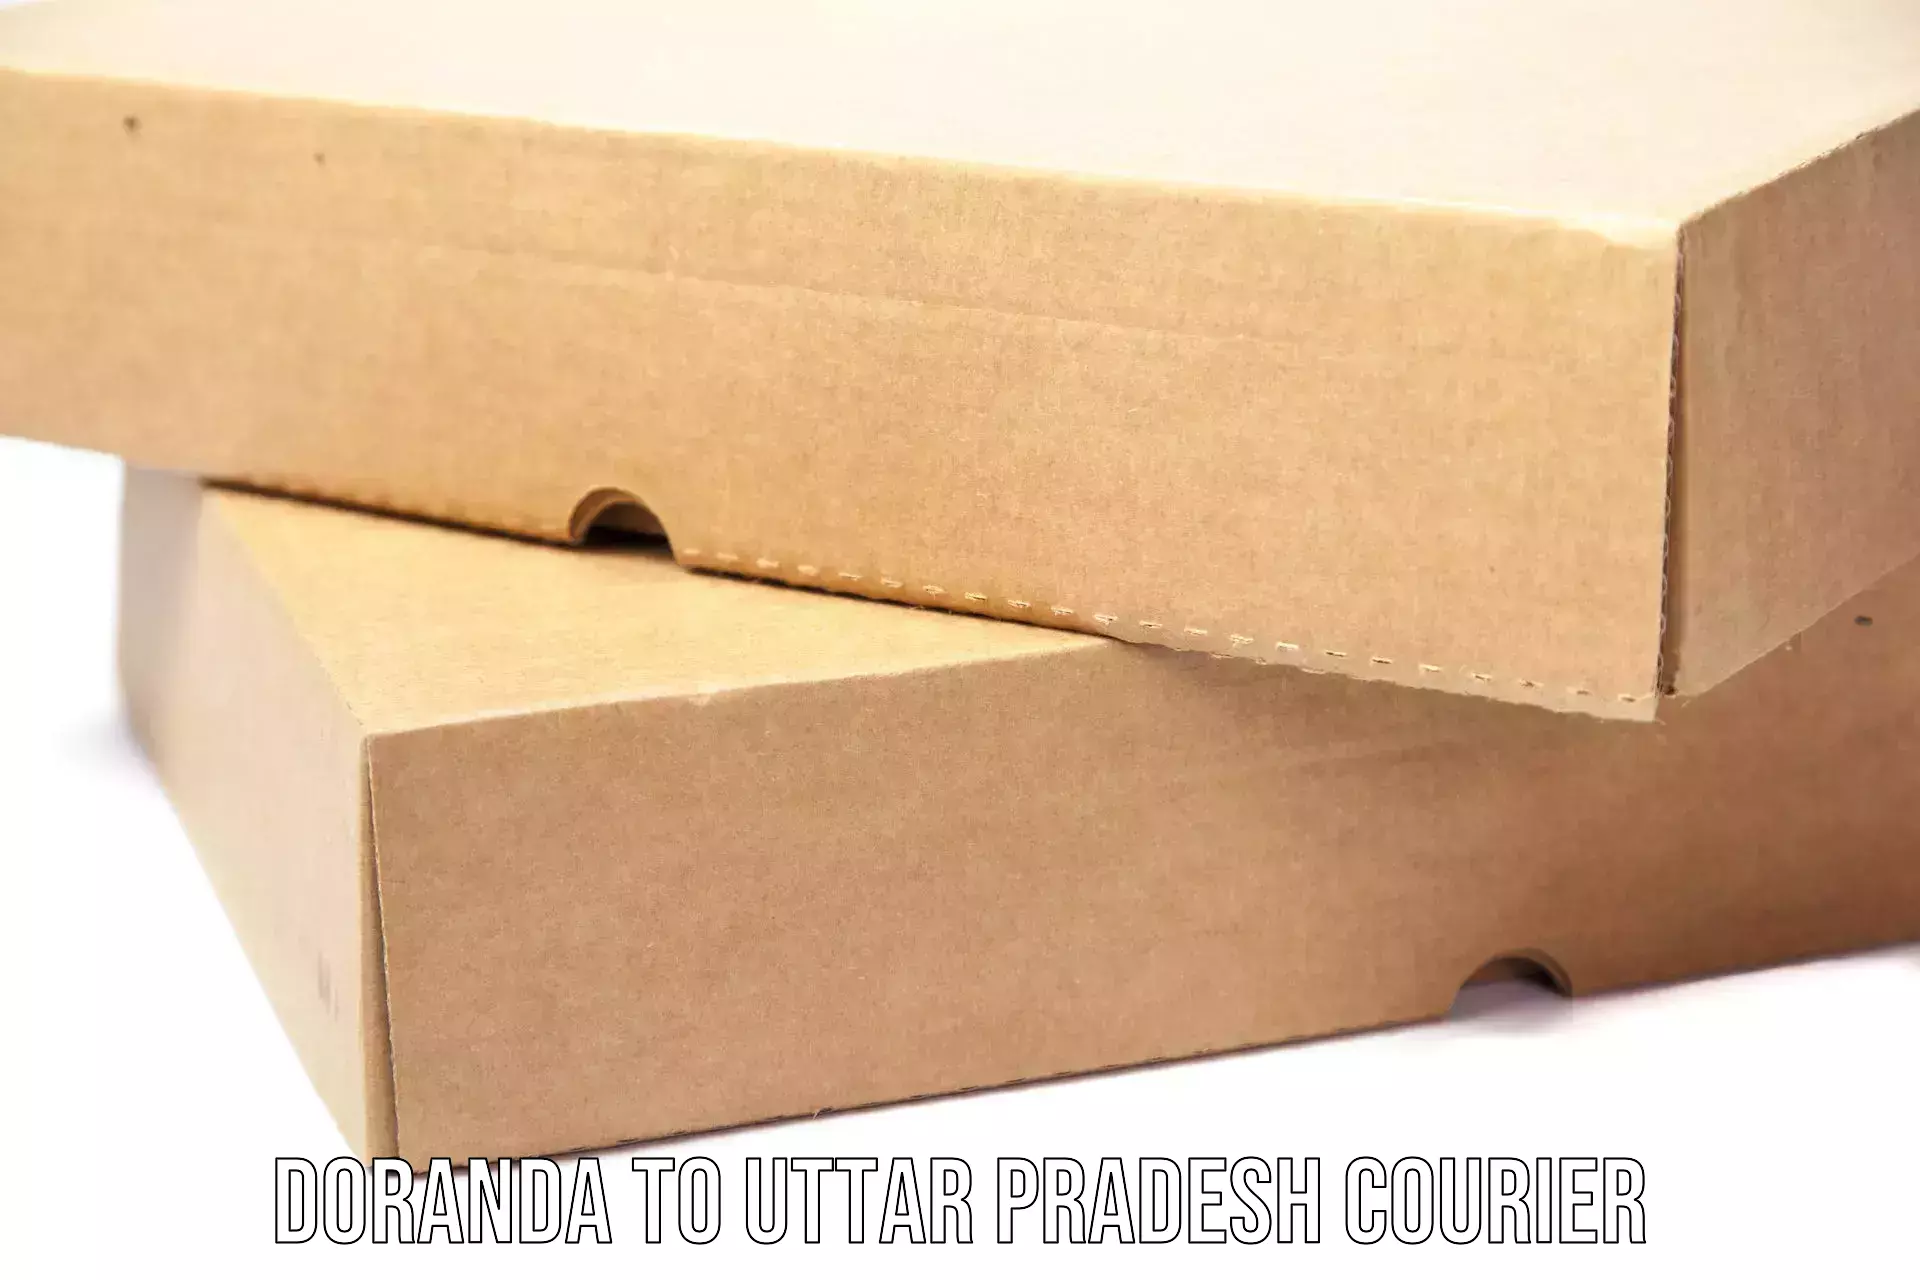 Express package delivery Doranda to Budhana